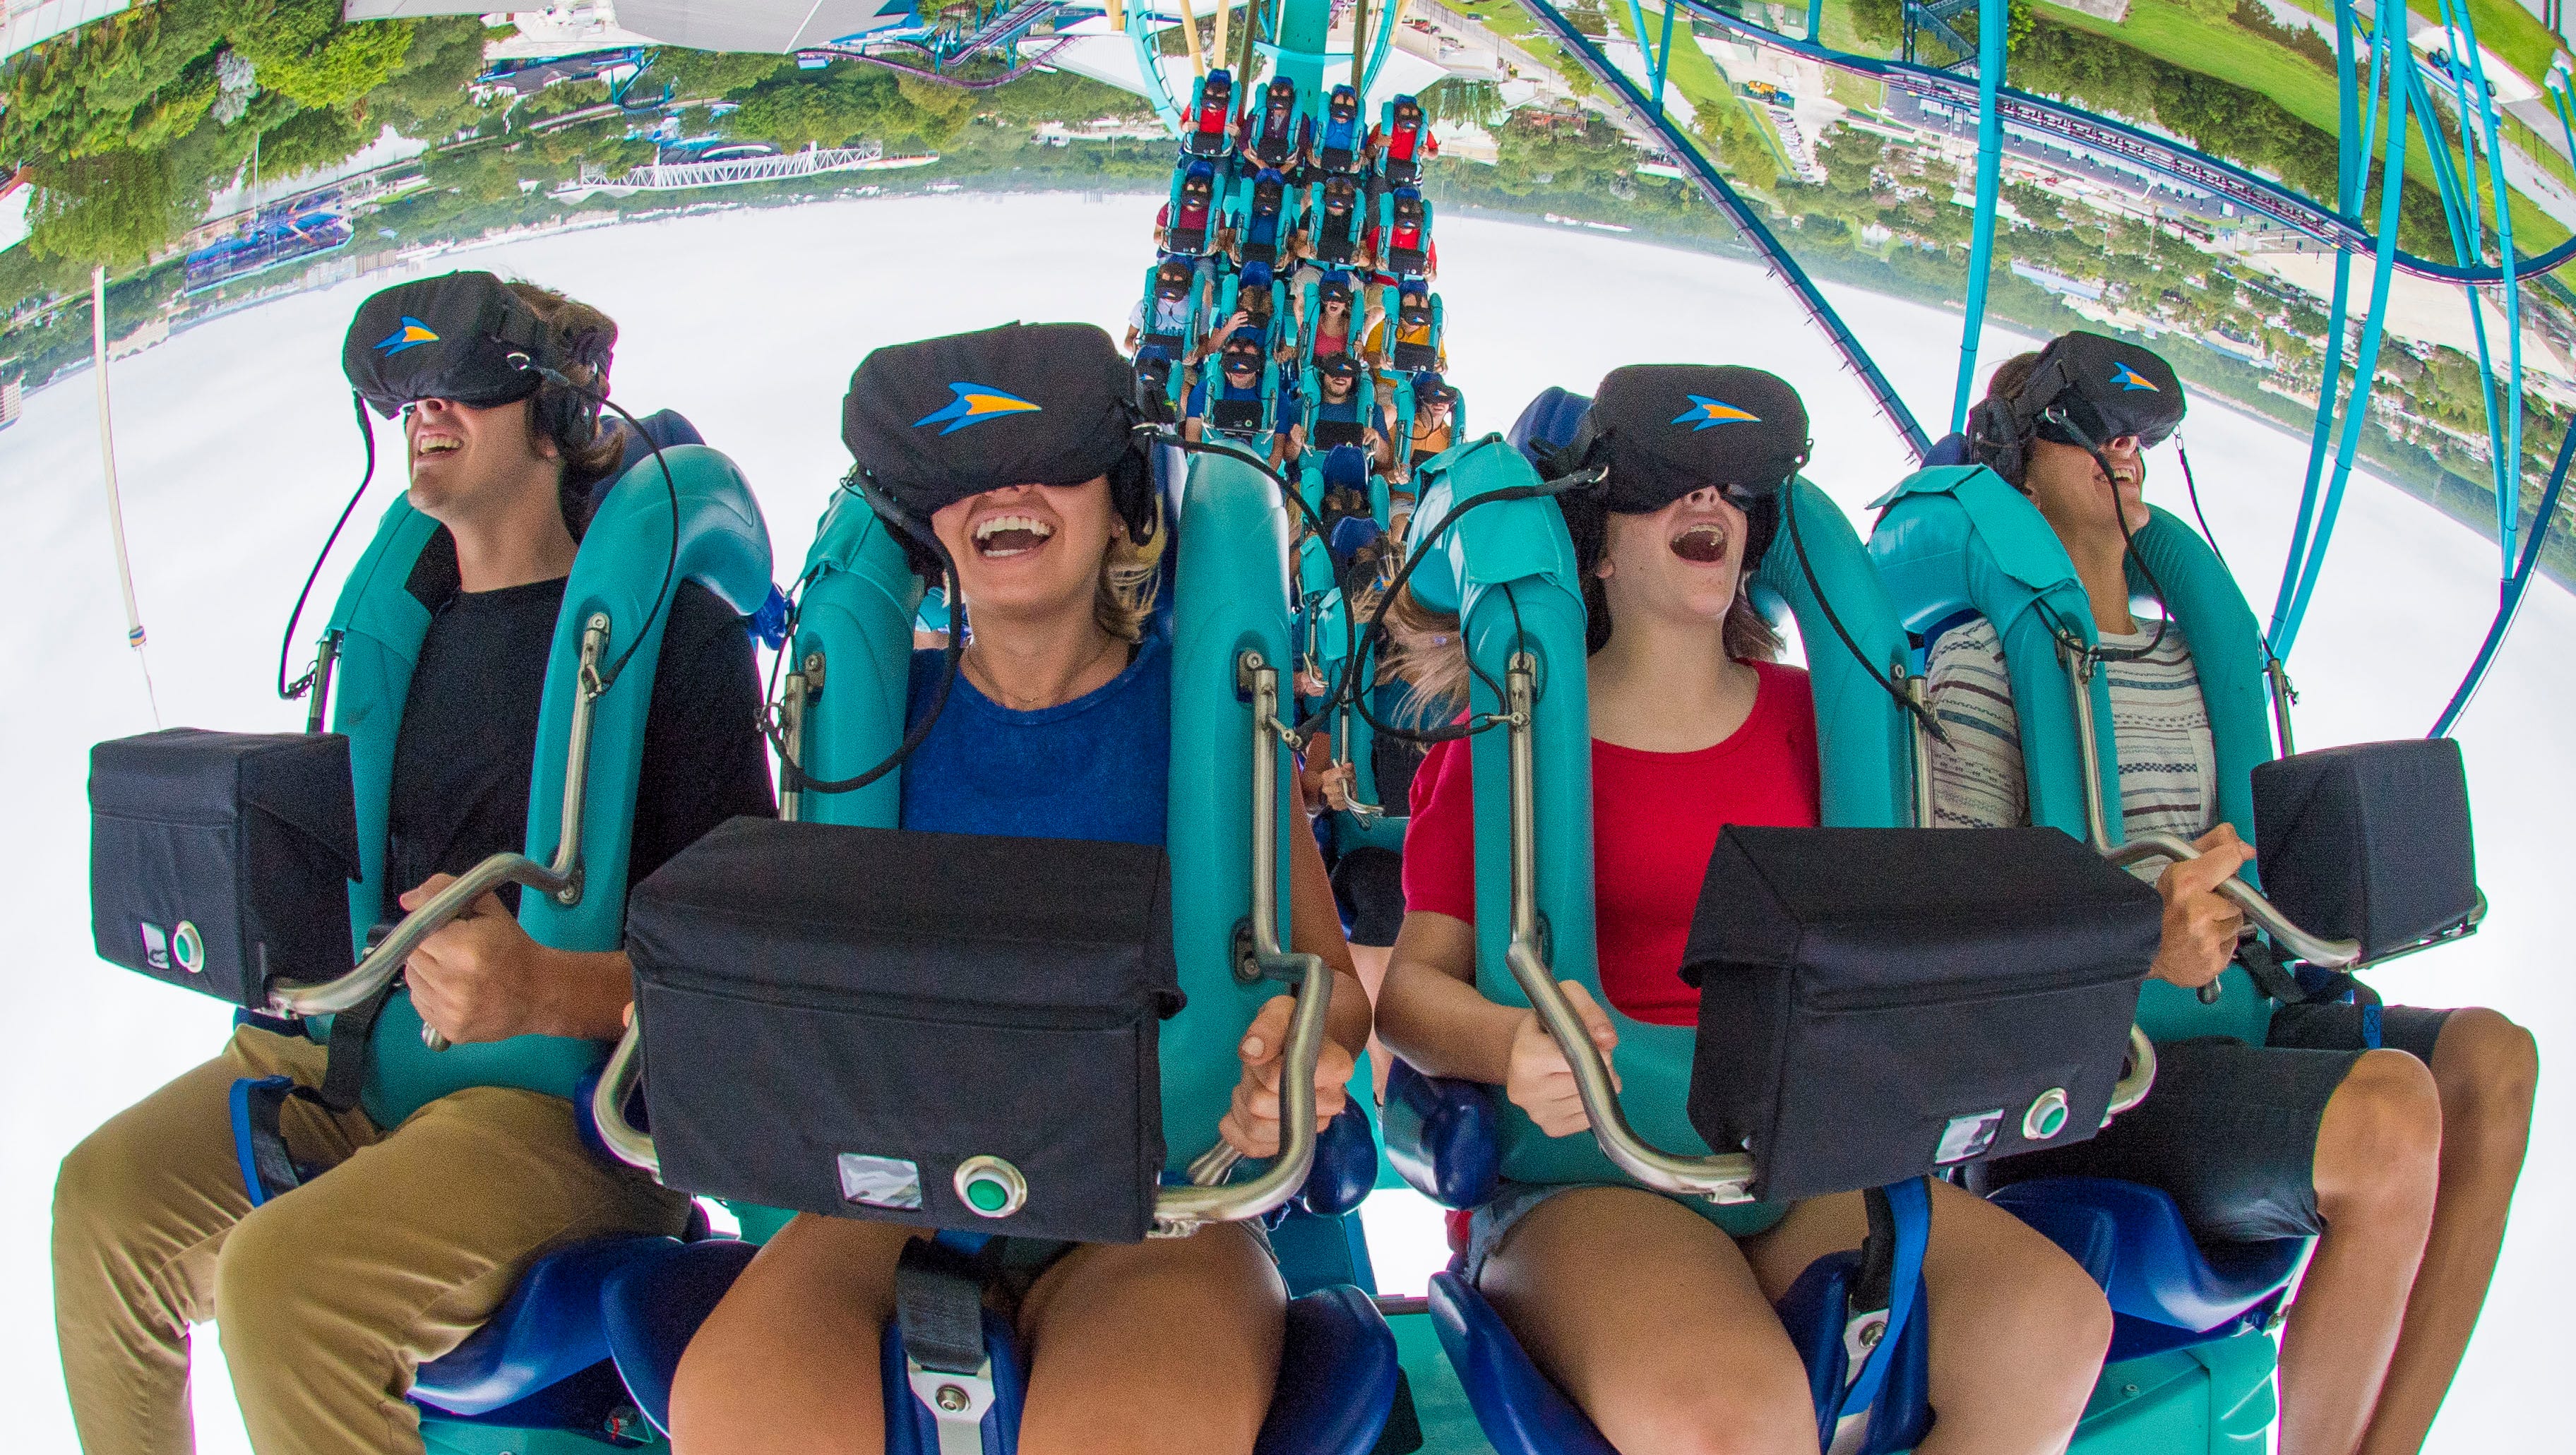 Устройства для развлечения. Epic Roller Coasters VR. VR Coaster extreme фото. Устройство для развлечений